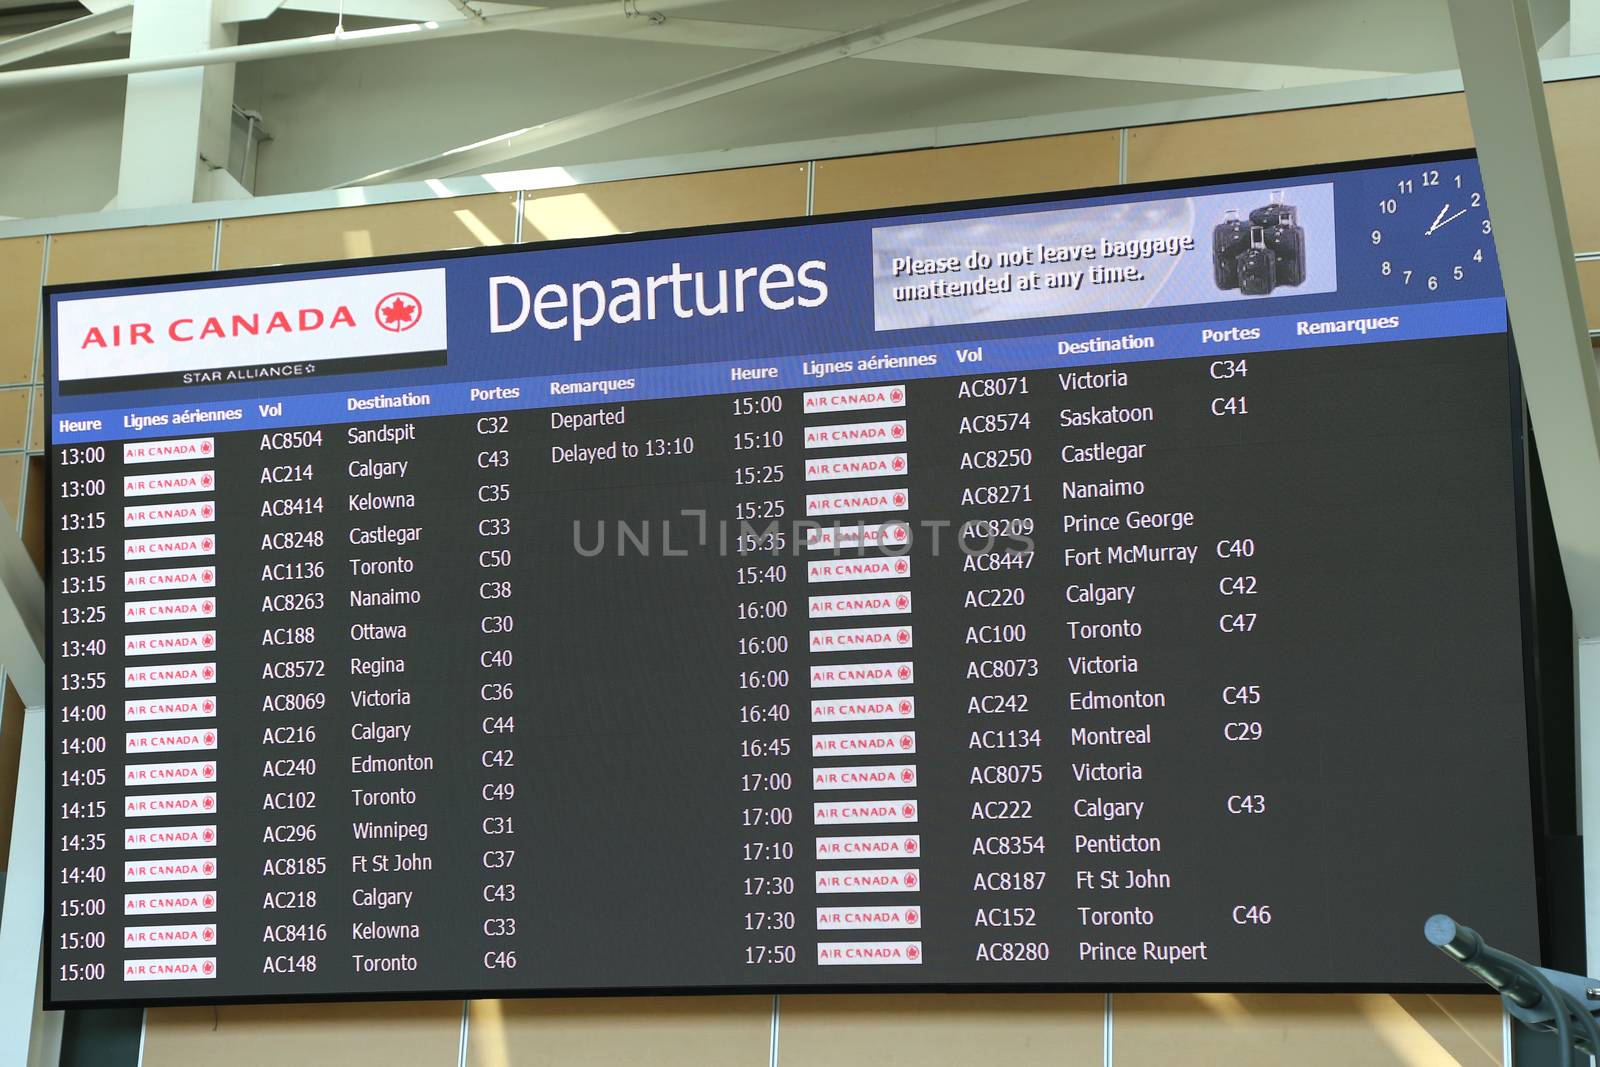 Macro airport departures monitor showing flight gate